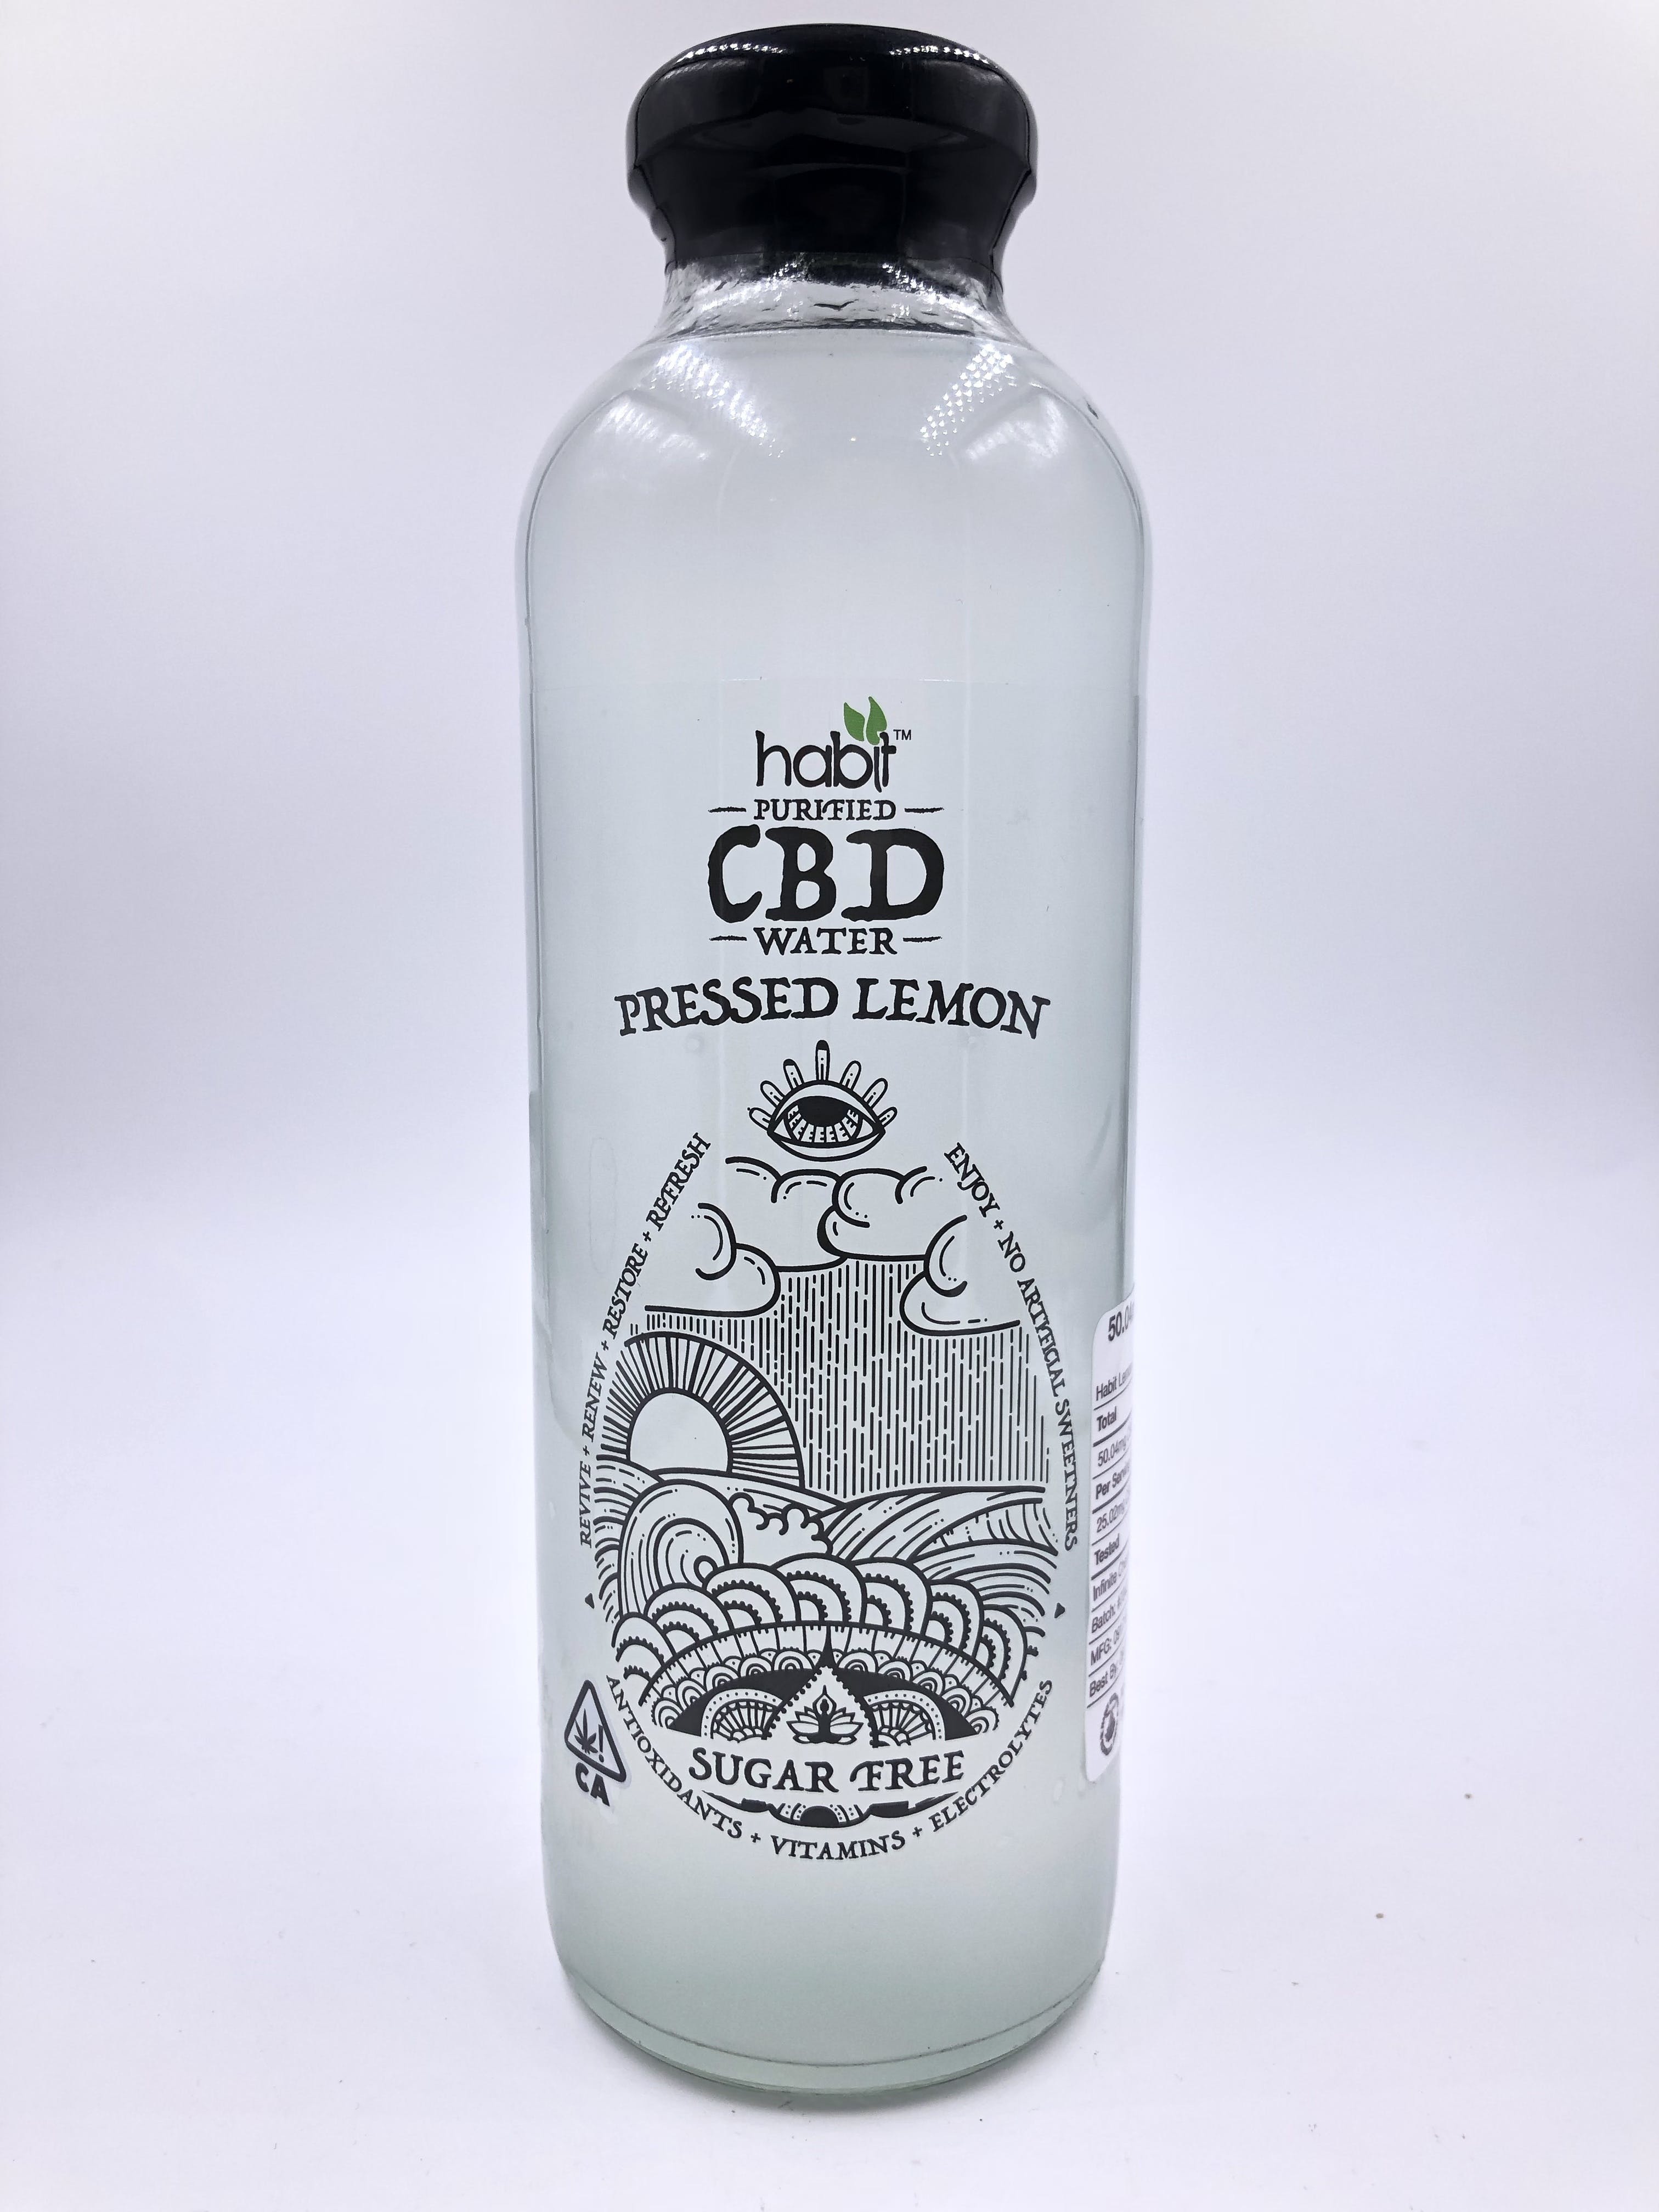 drink-the-habit-cbd-water-pressed-lemon-50mg